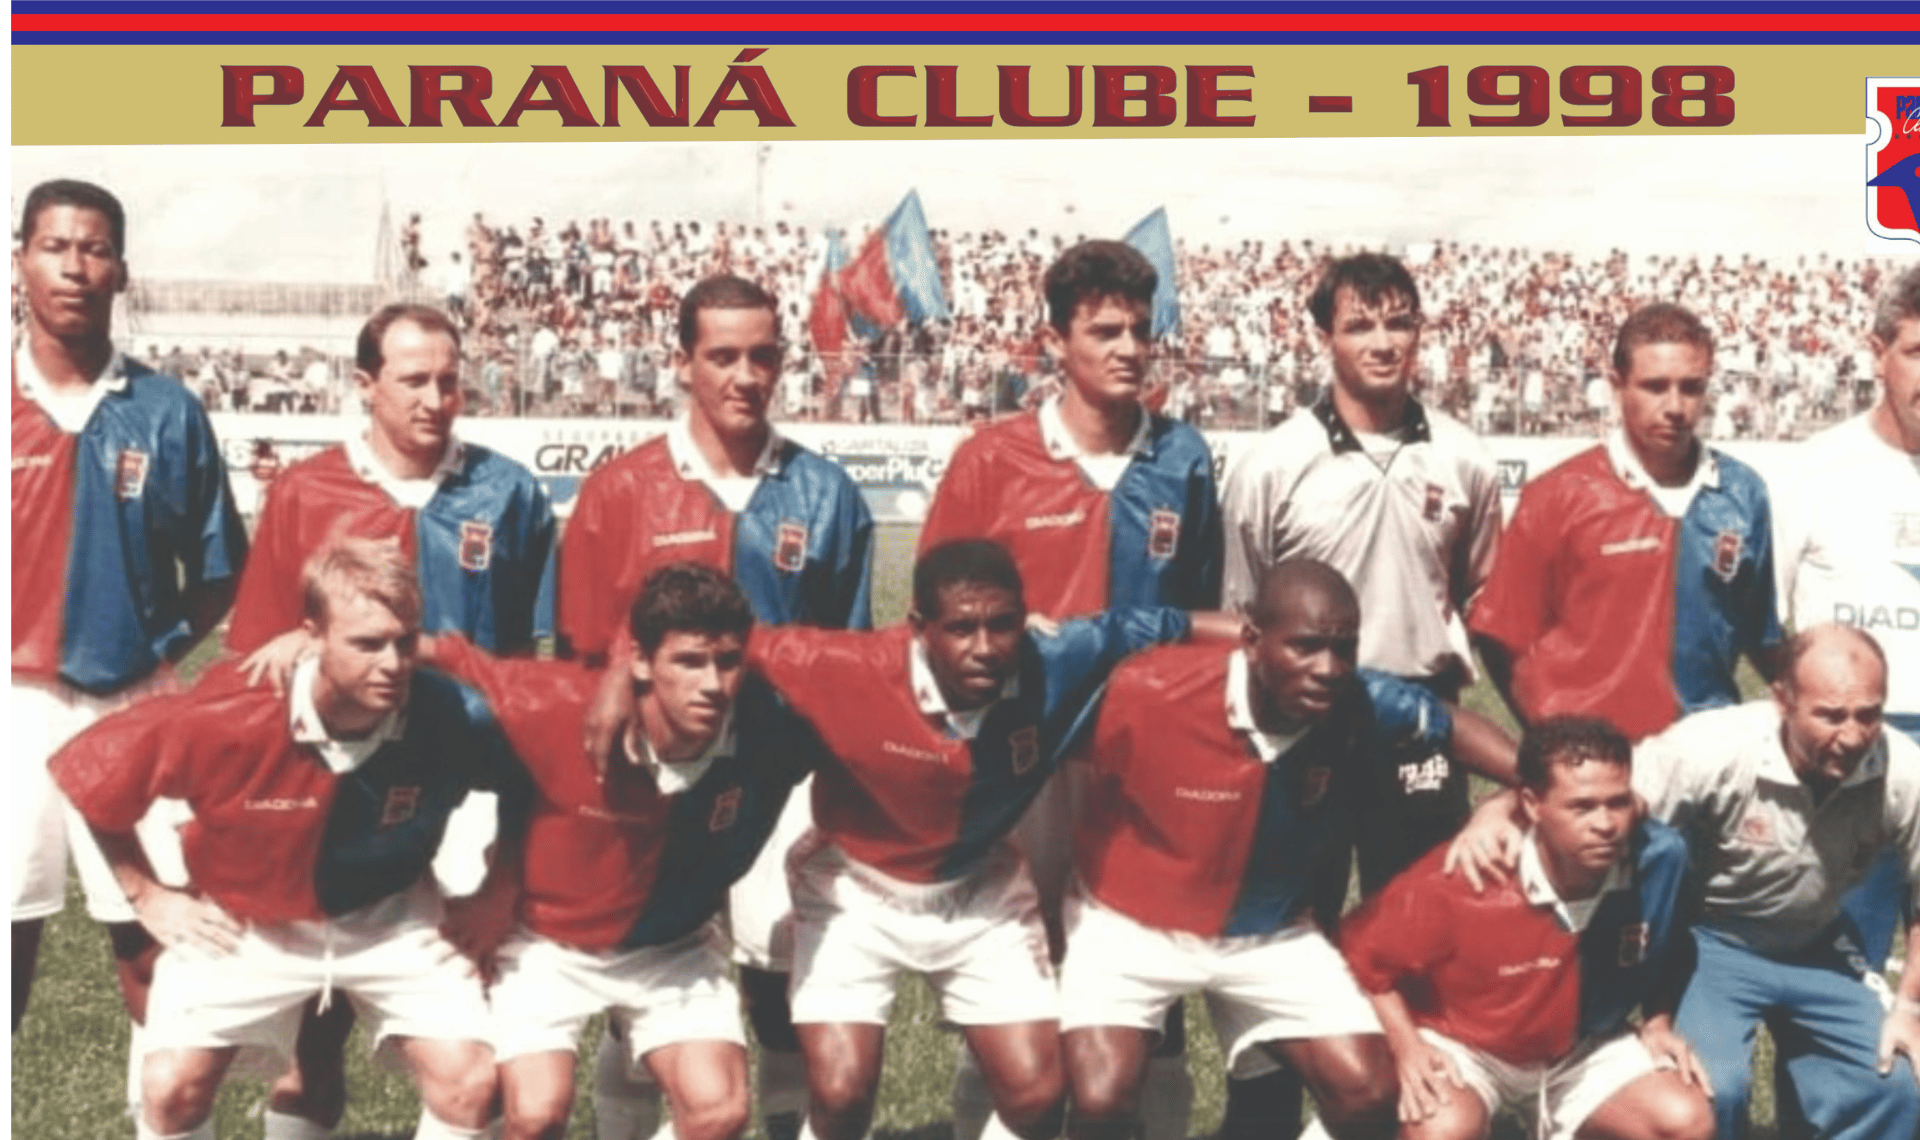 Paraná club 1988